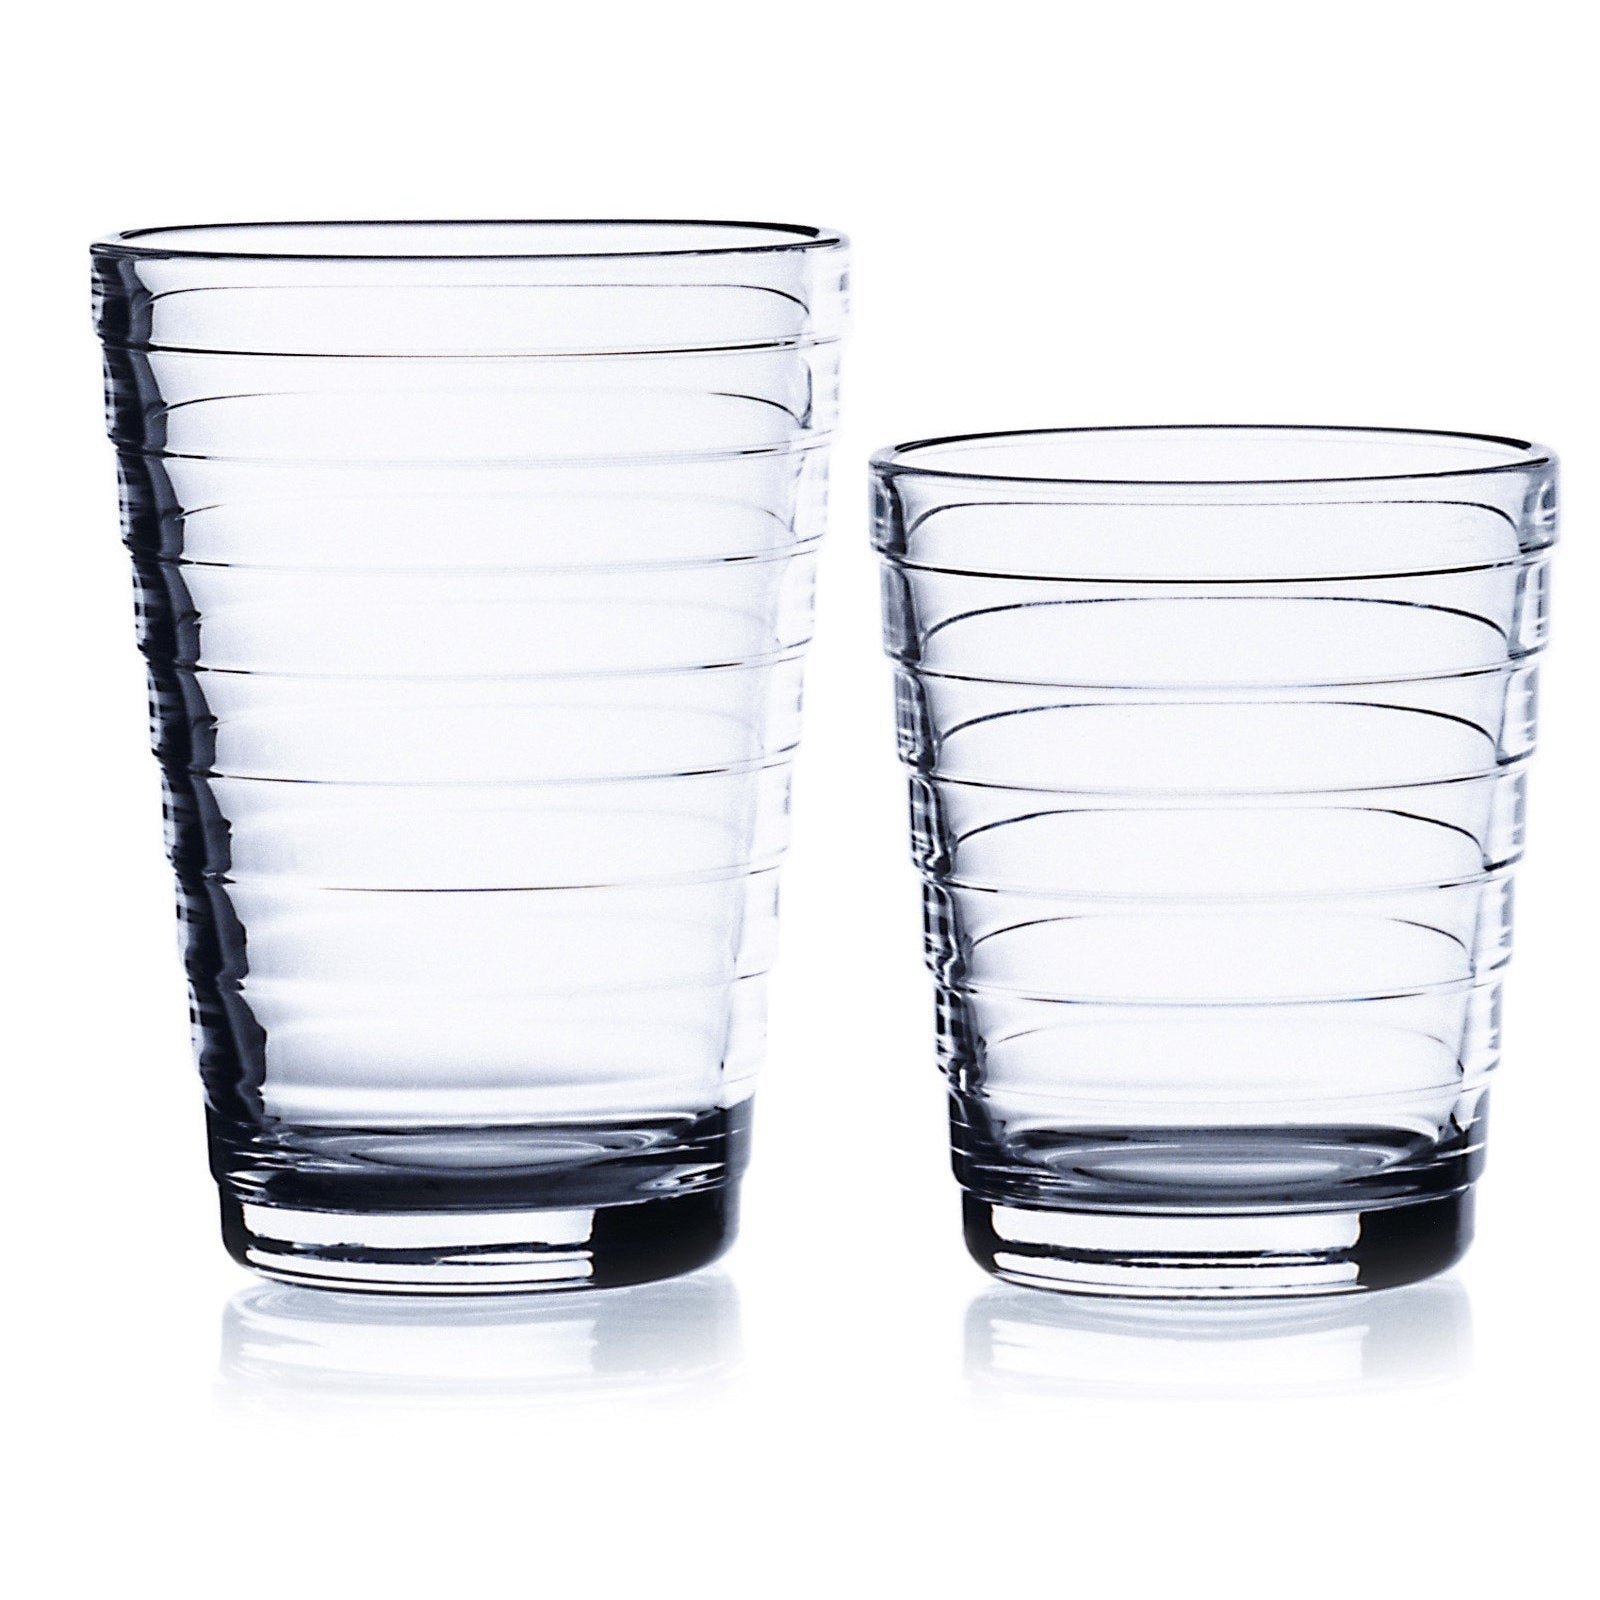 Iittala Aino aalto glass klar 2 stk, 22cl